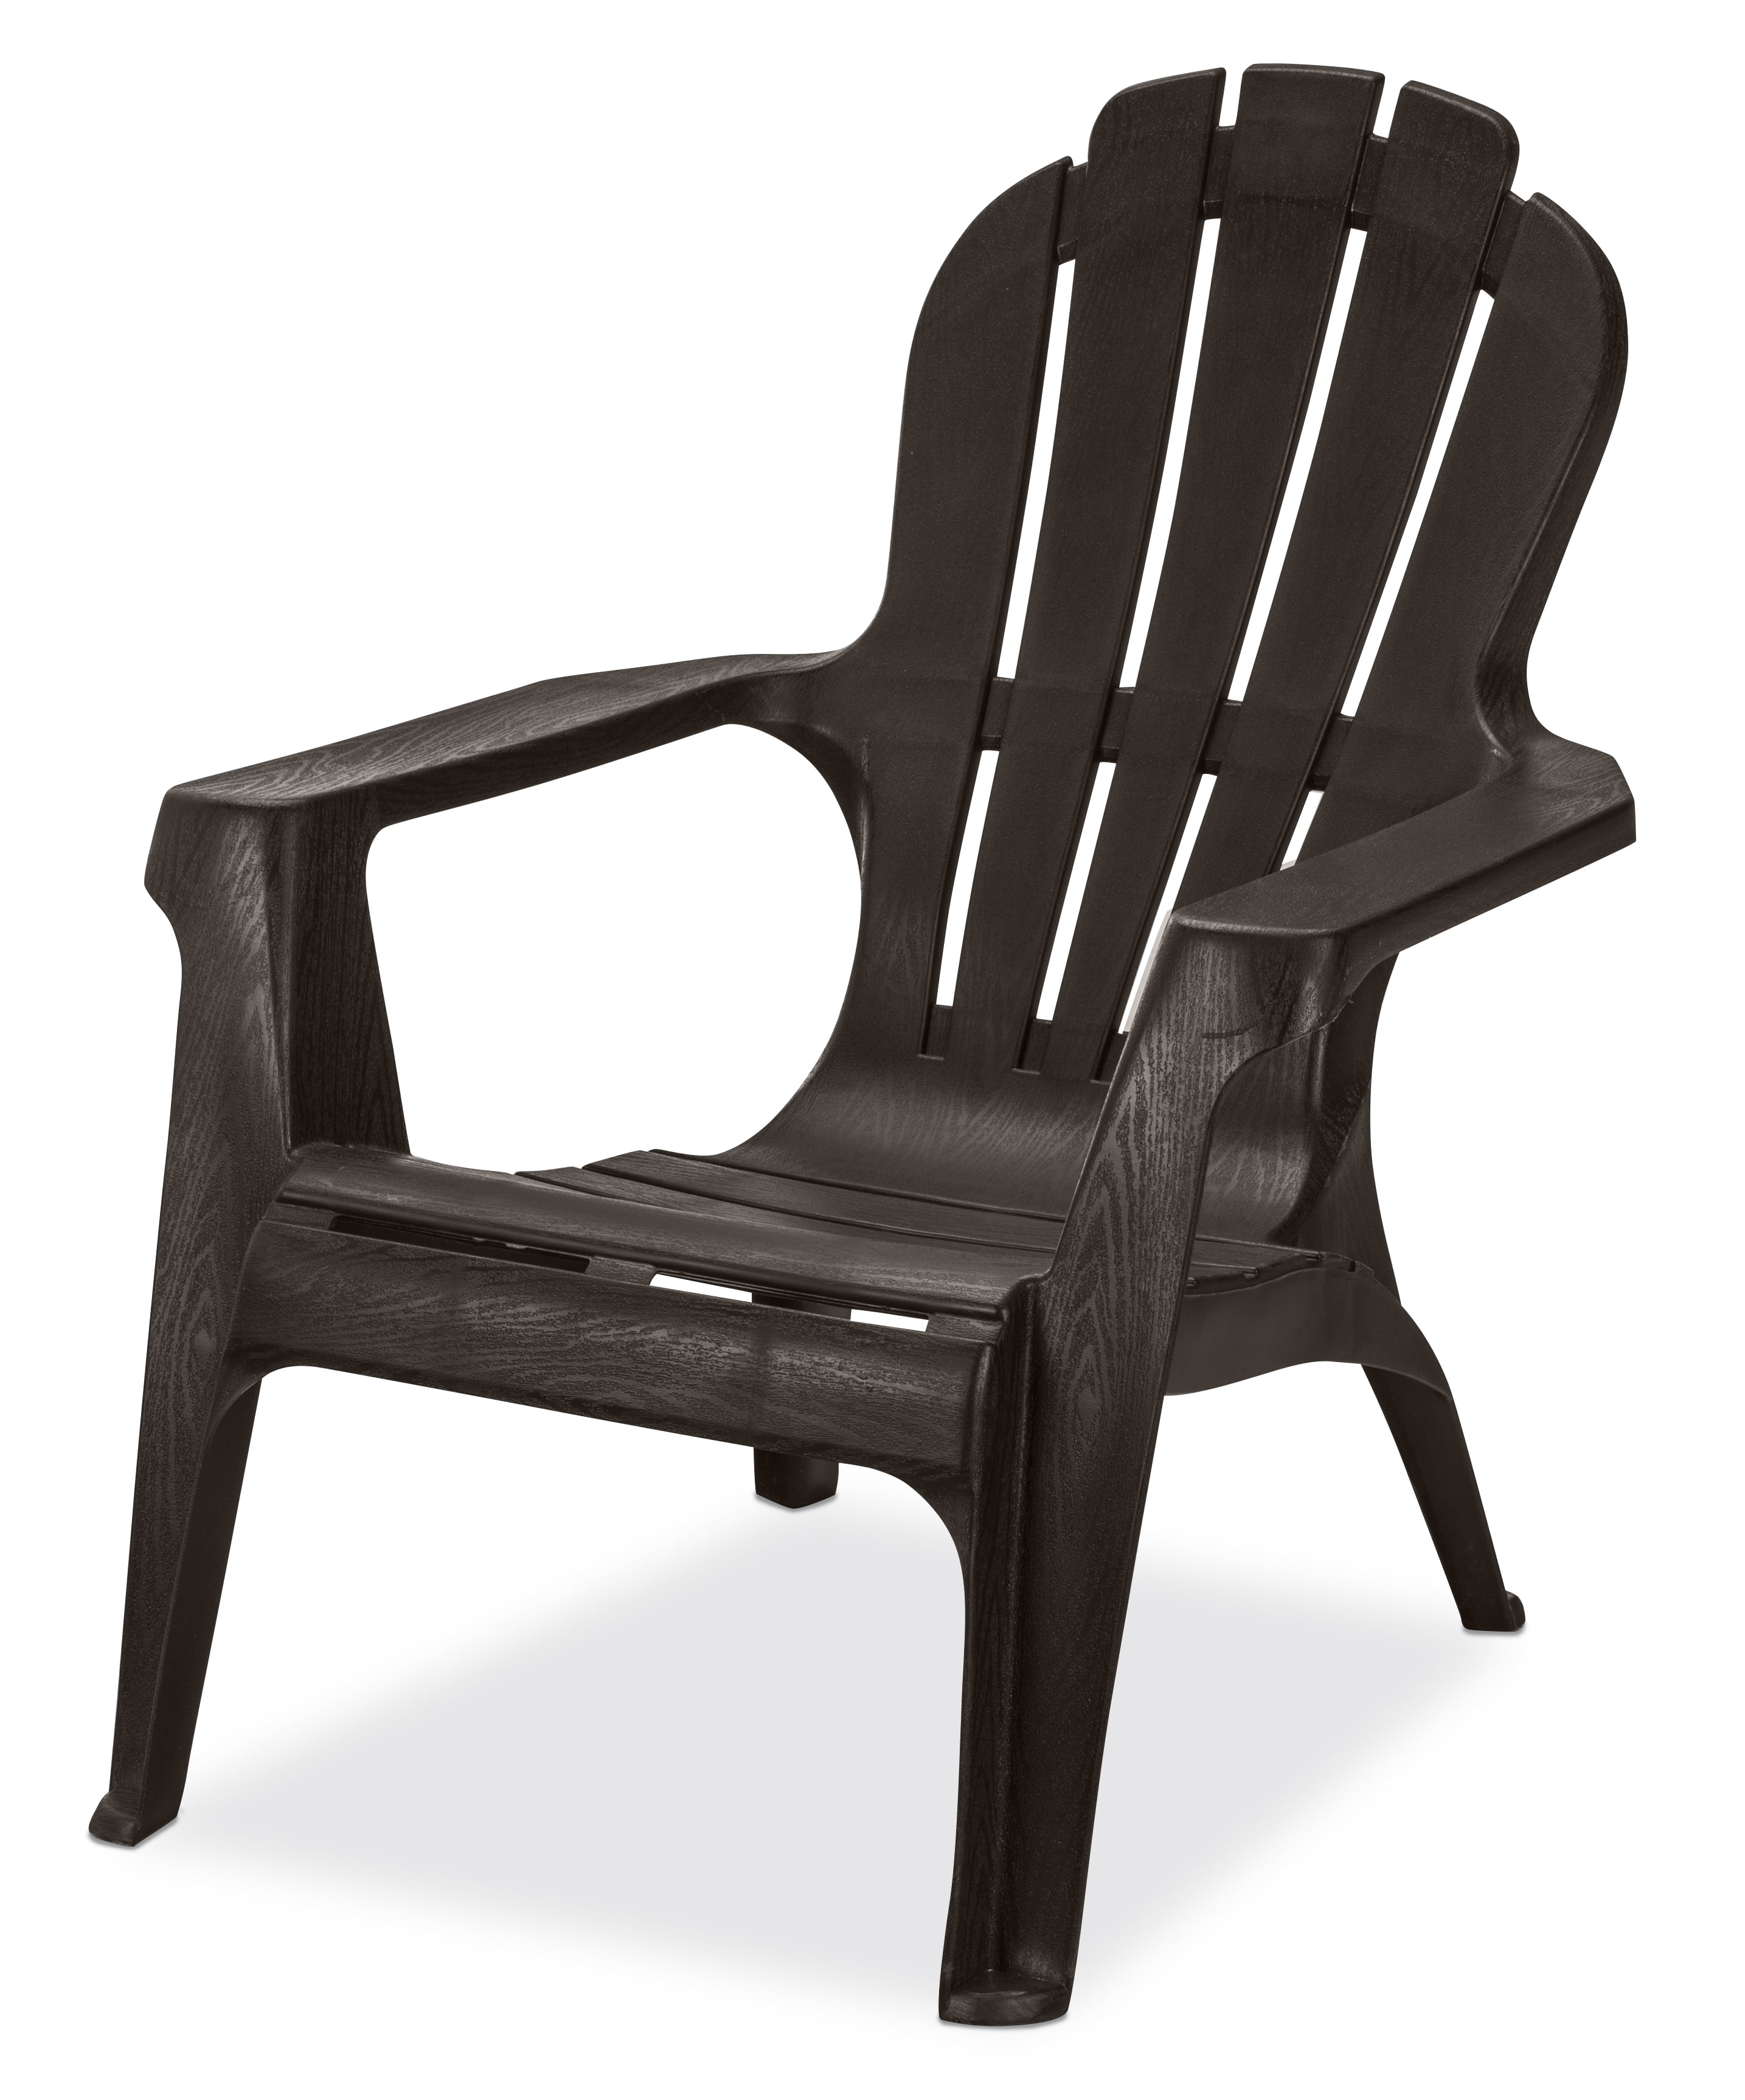 New Adirondack Chair Plastic Canada 